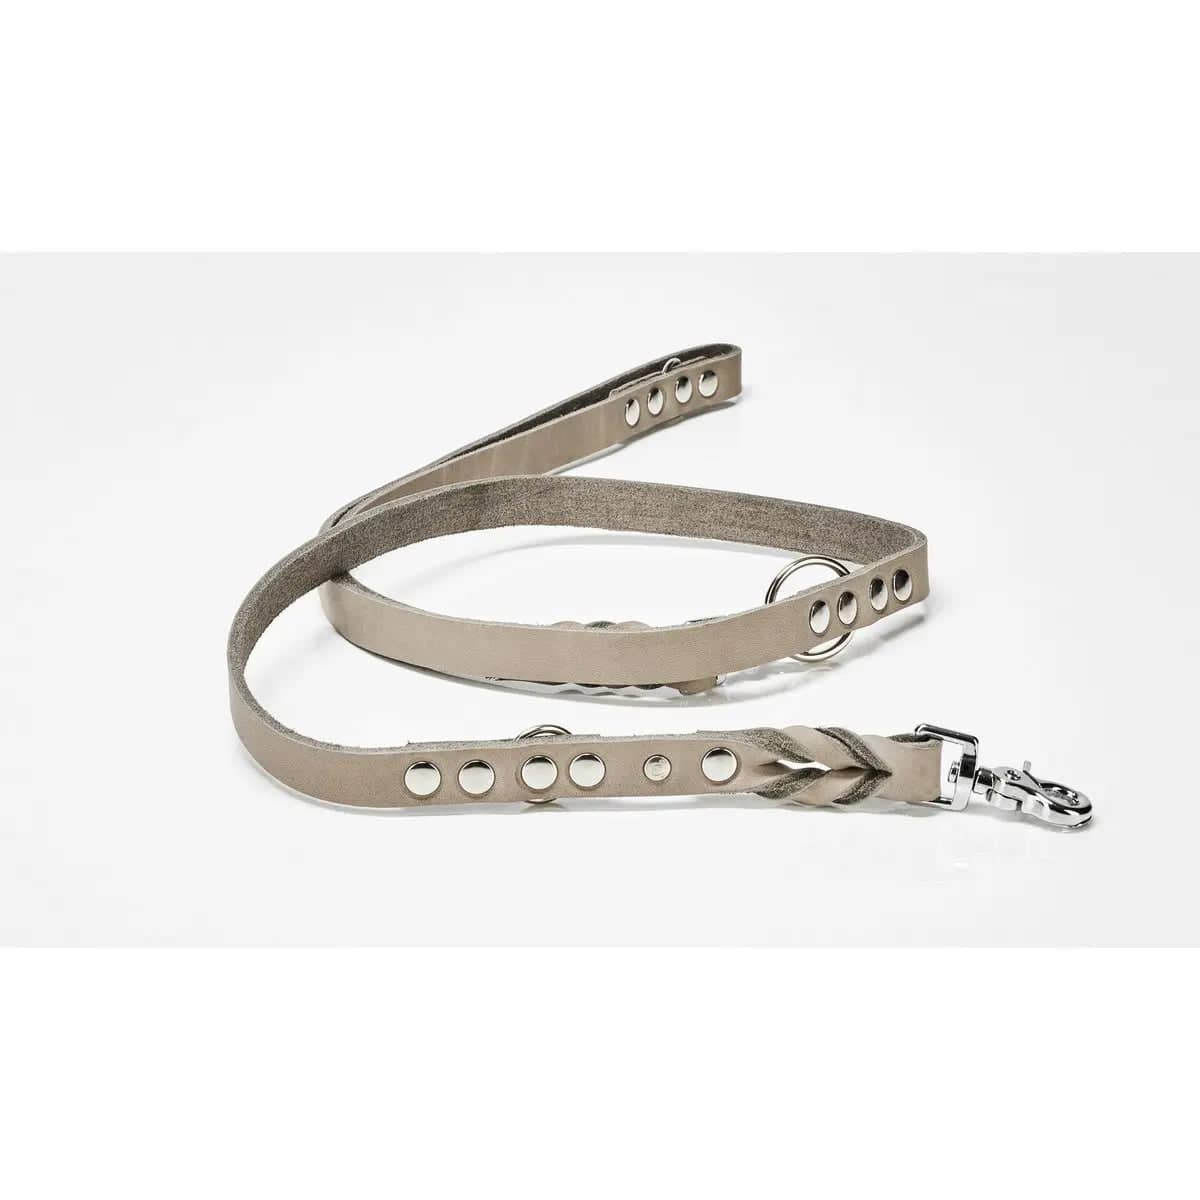 Elegant braided dog collar and leash - GIRO quality design